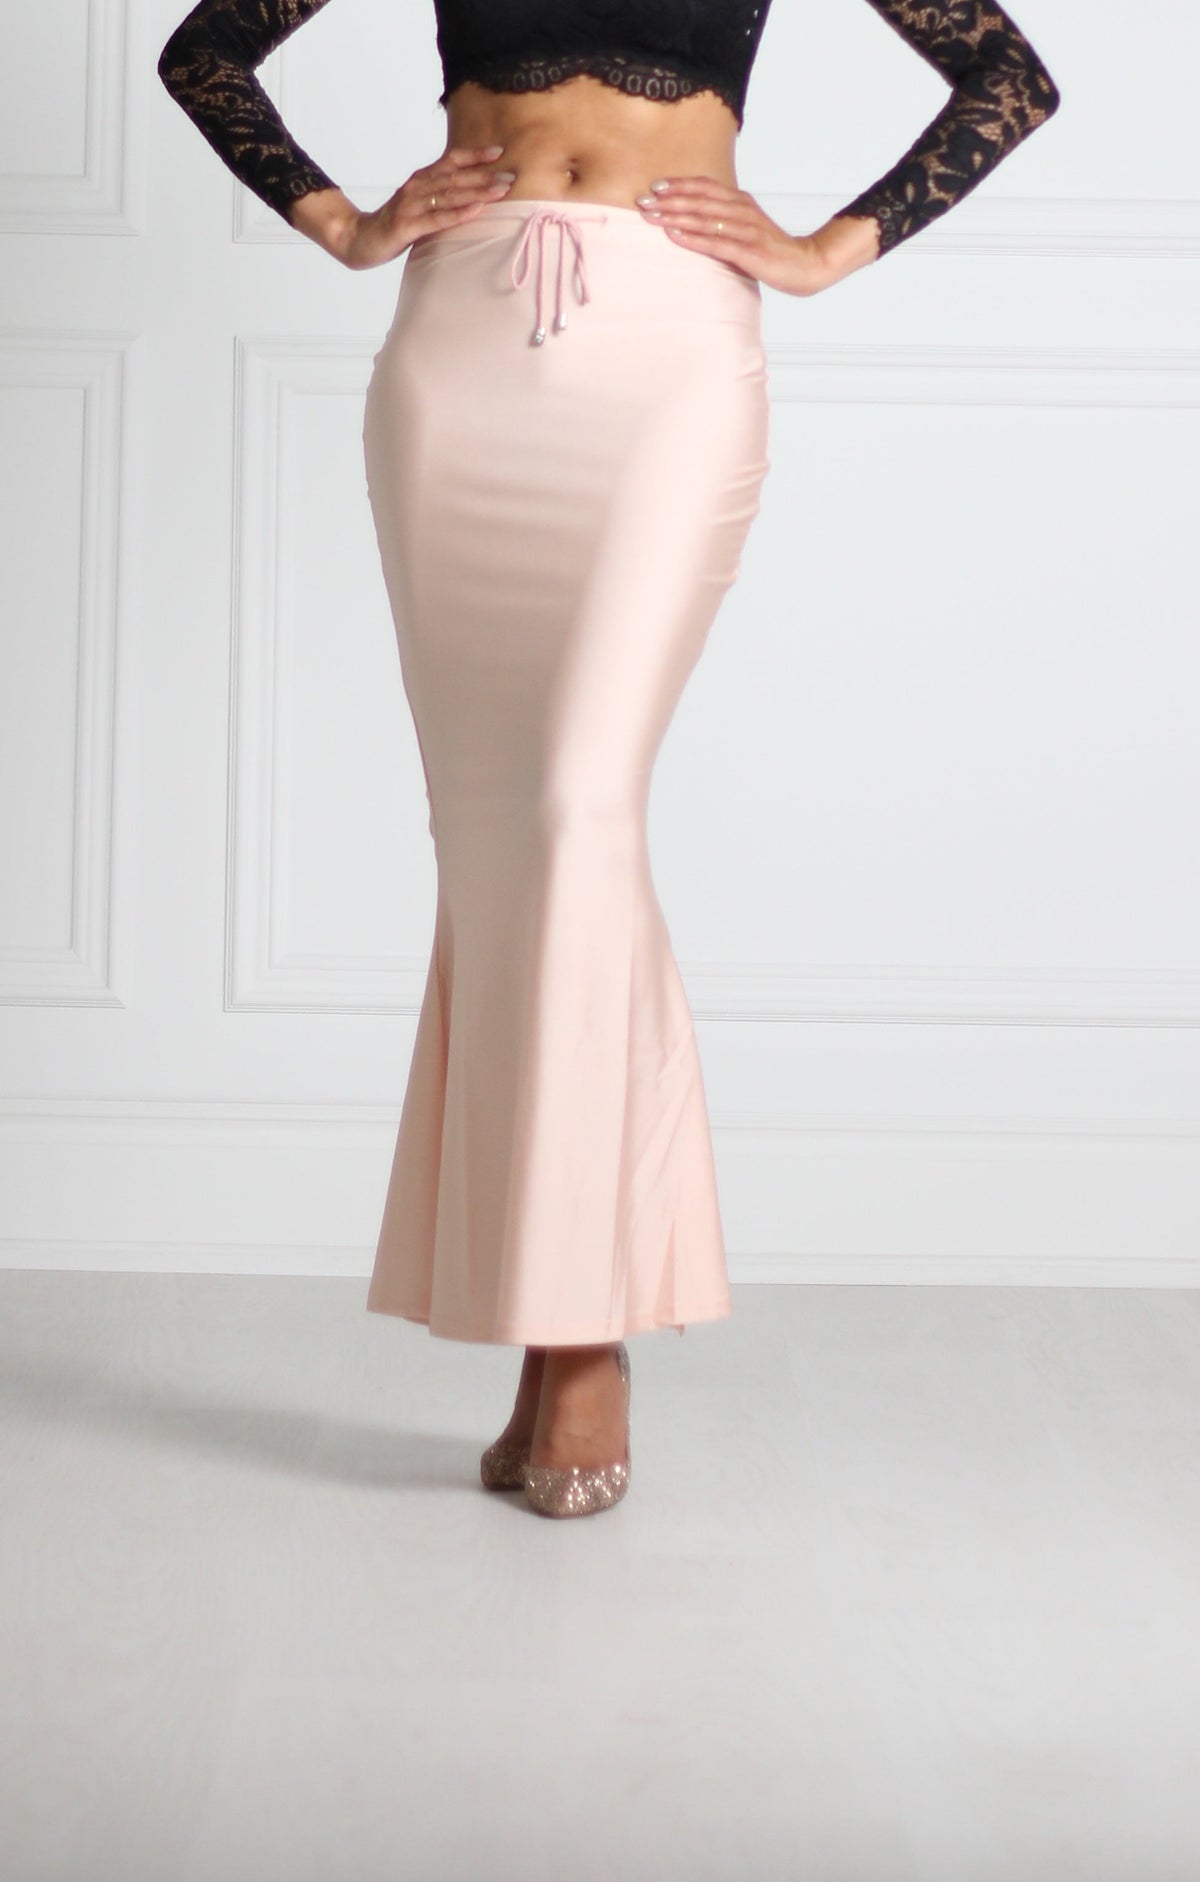 Tall 40 Ballerina Saree Silhouette™, Saree Petticoat